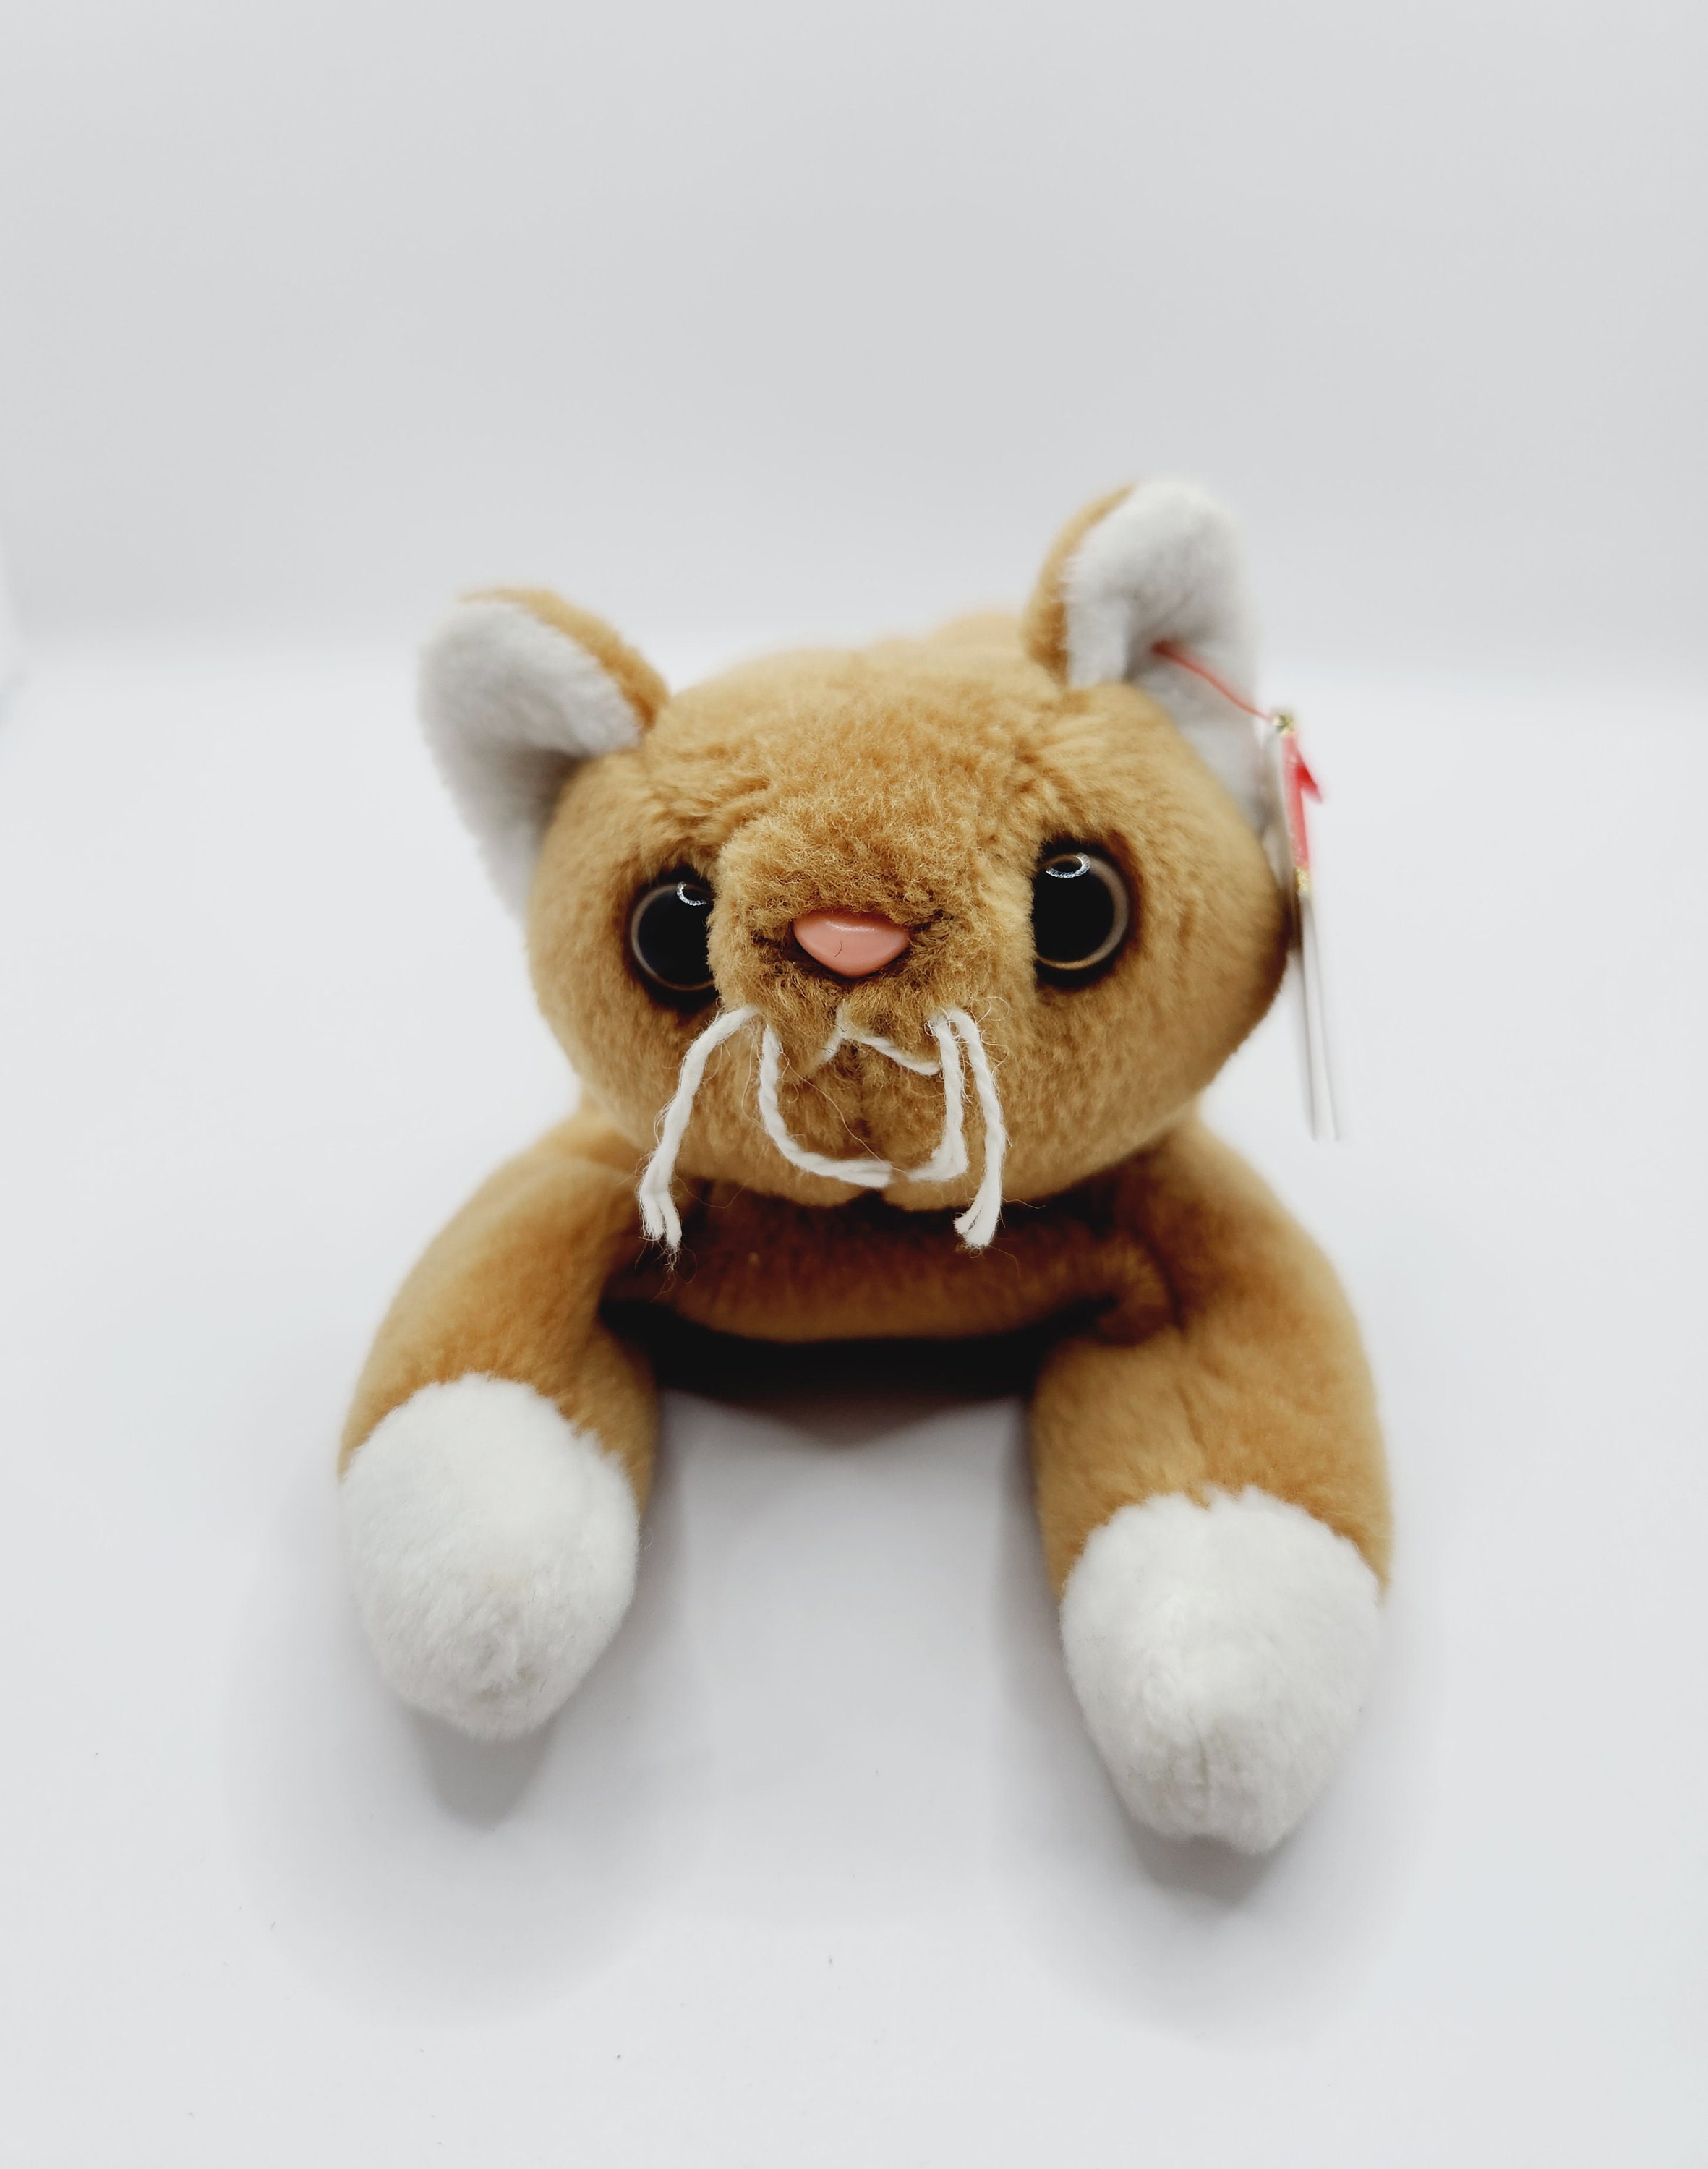 Ty Beanie Baby: Nip the Cat - White Paws | Stuffed Animal | MWMT